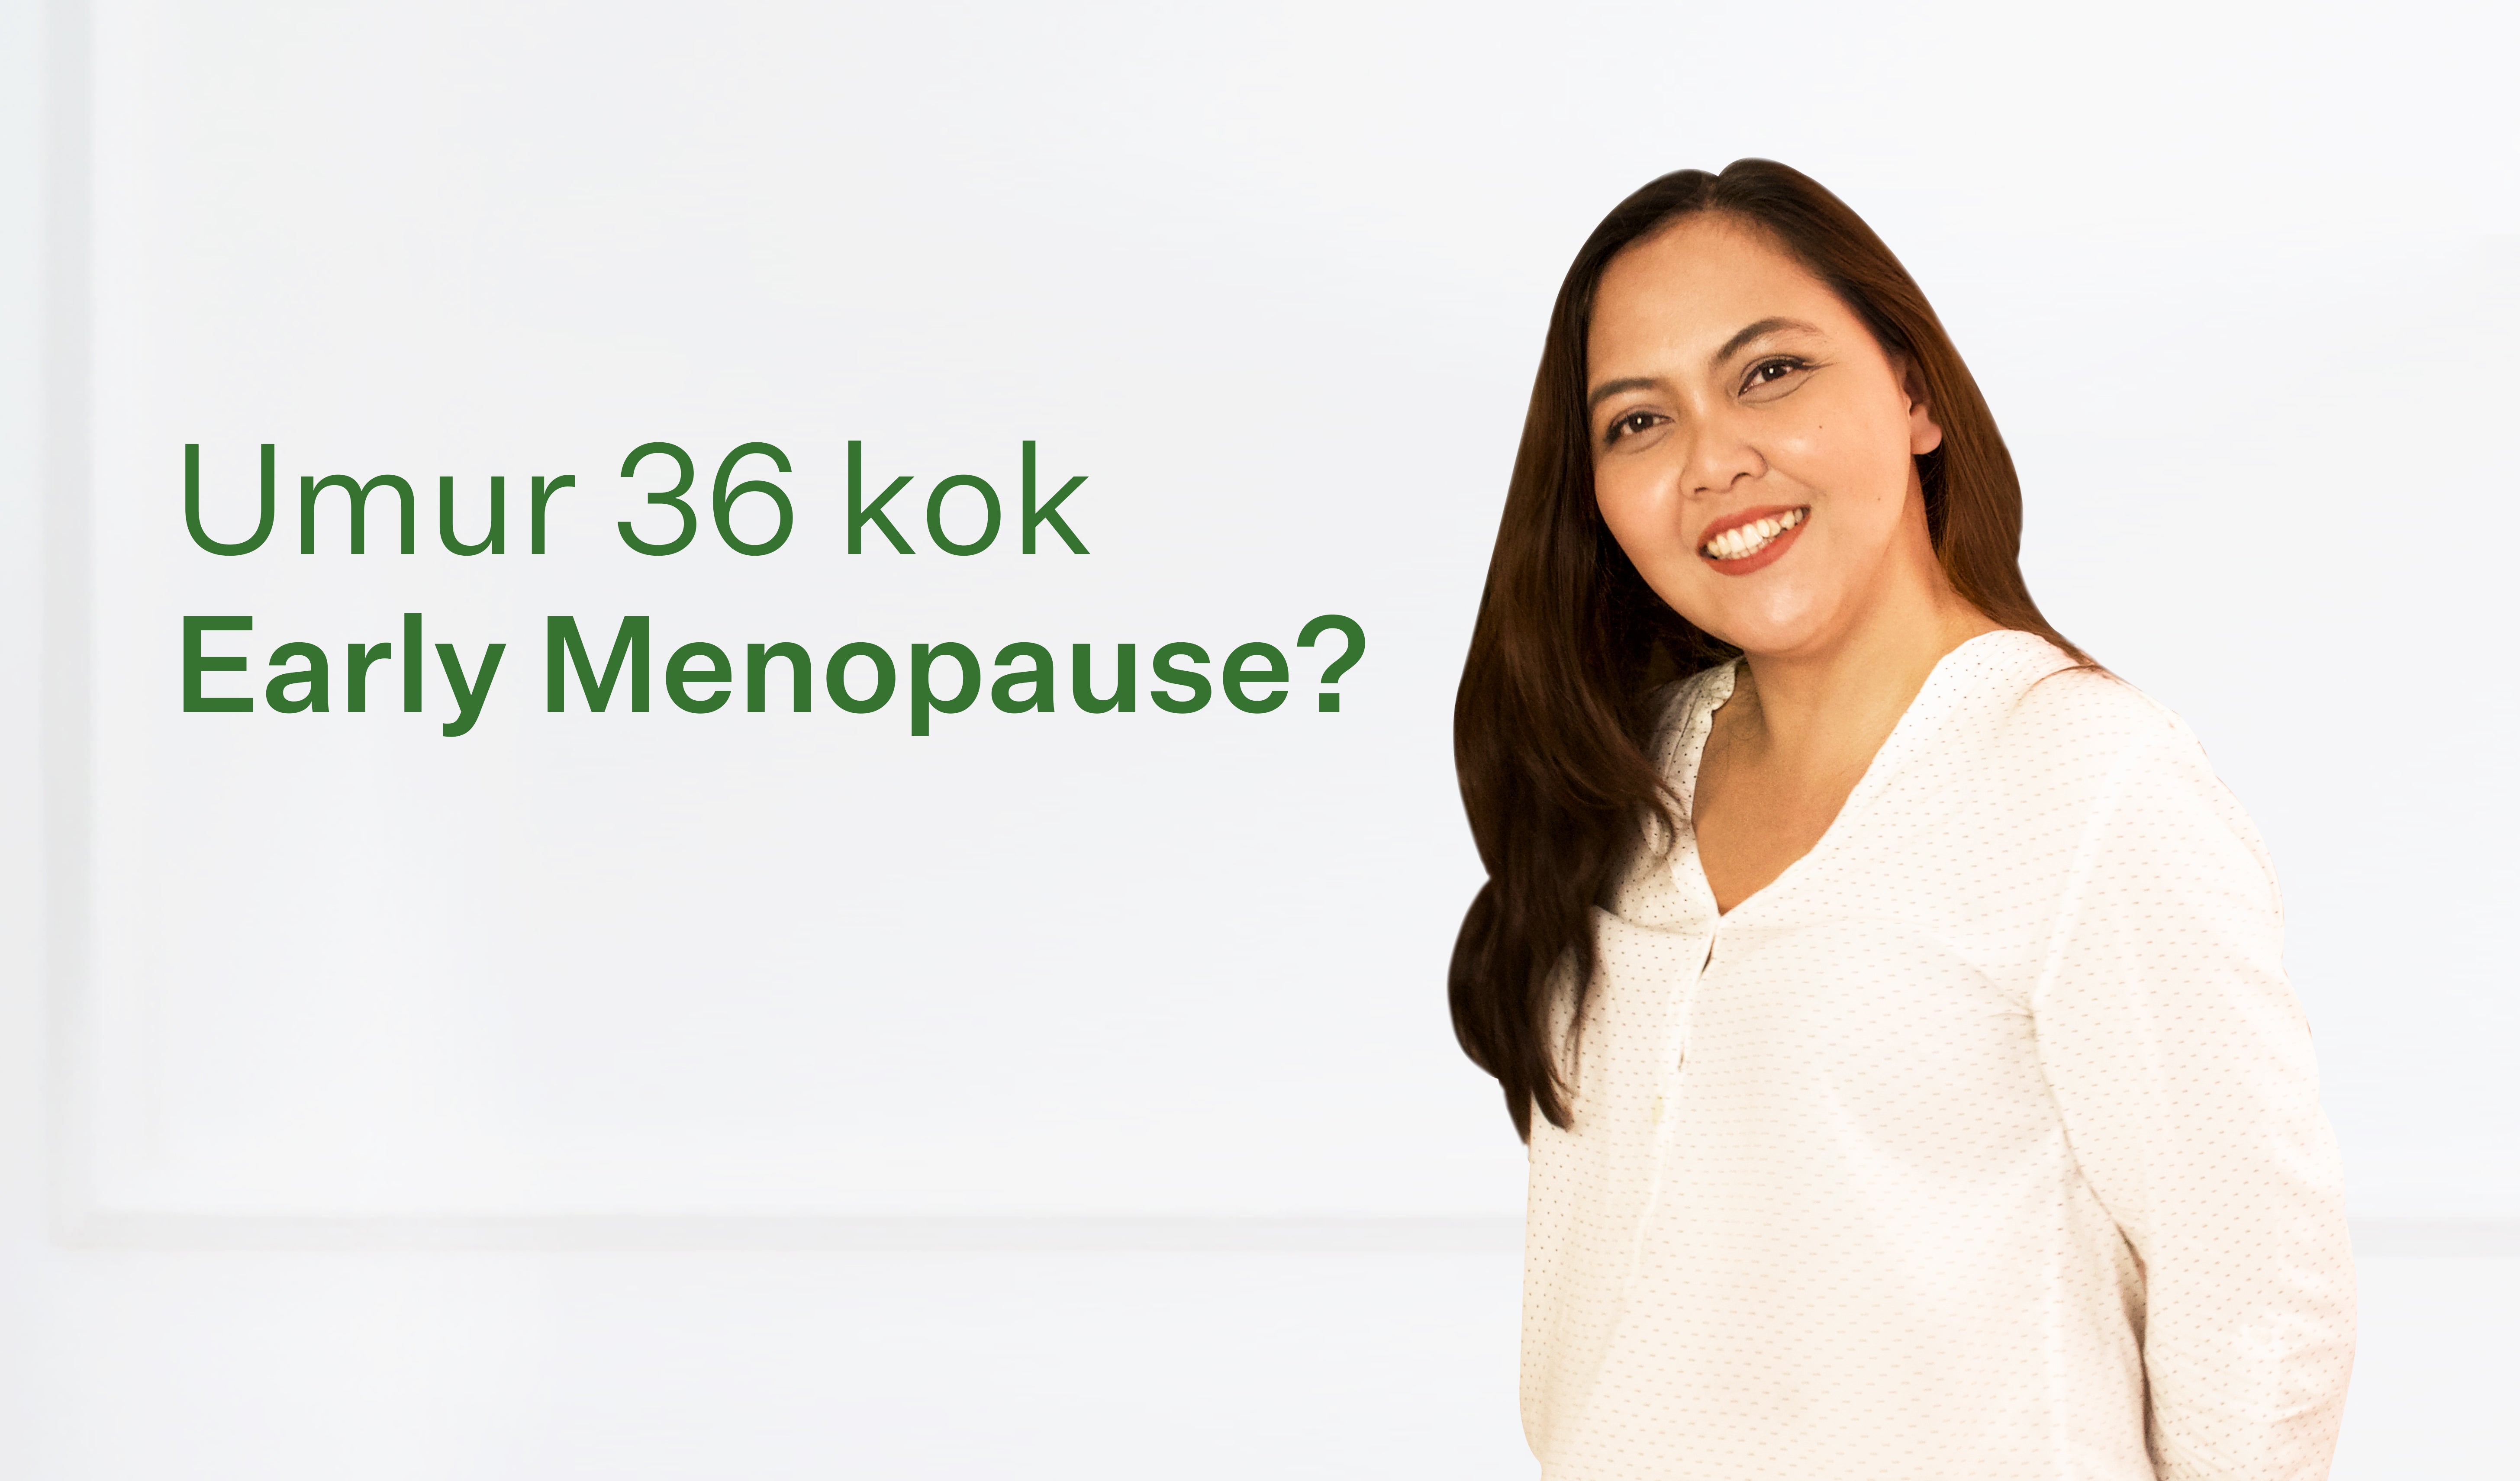 Kinan Asneta, Umur 36 kok Early Menopause?